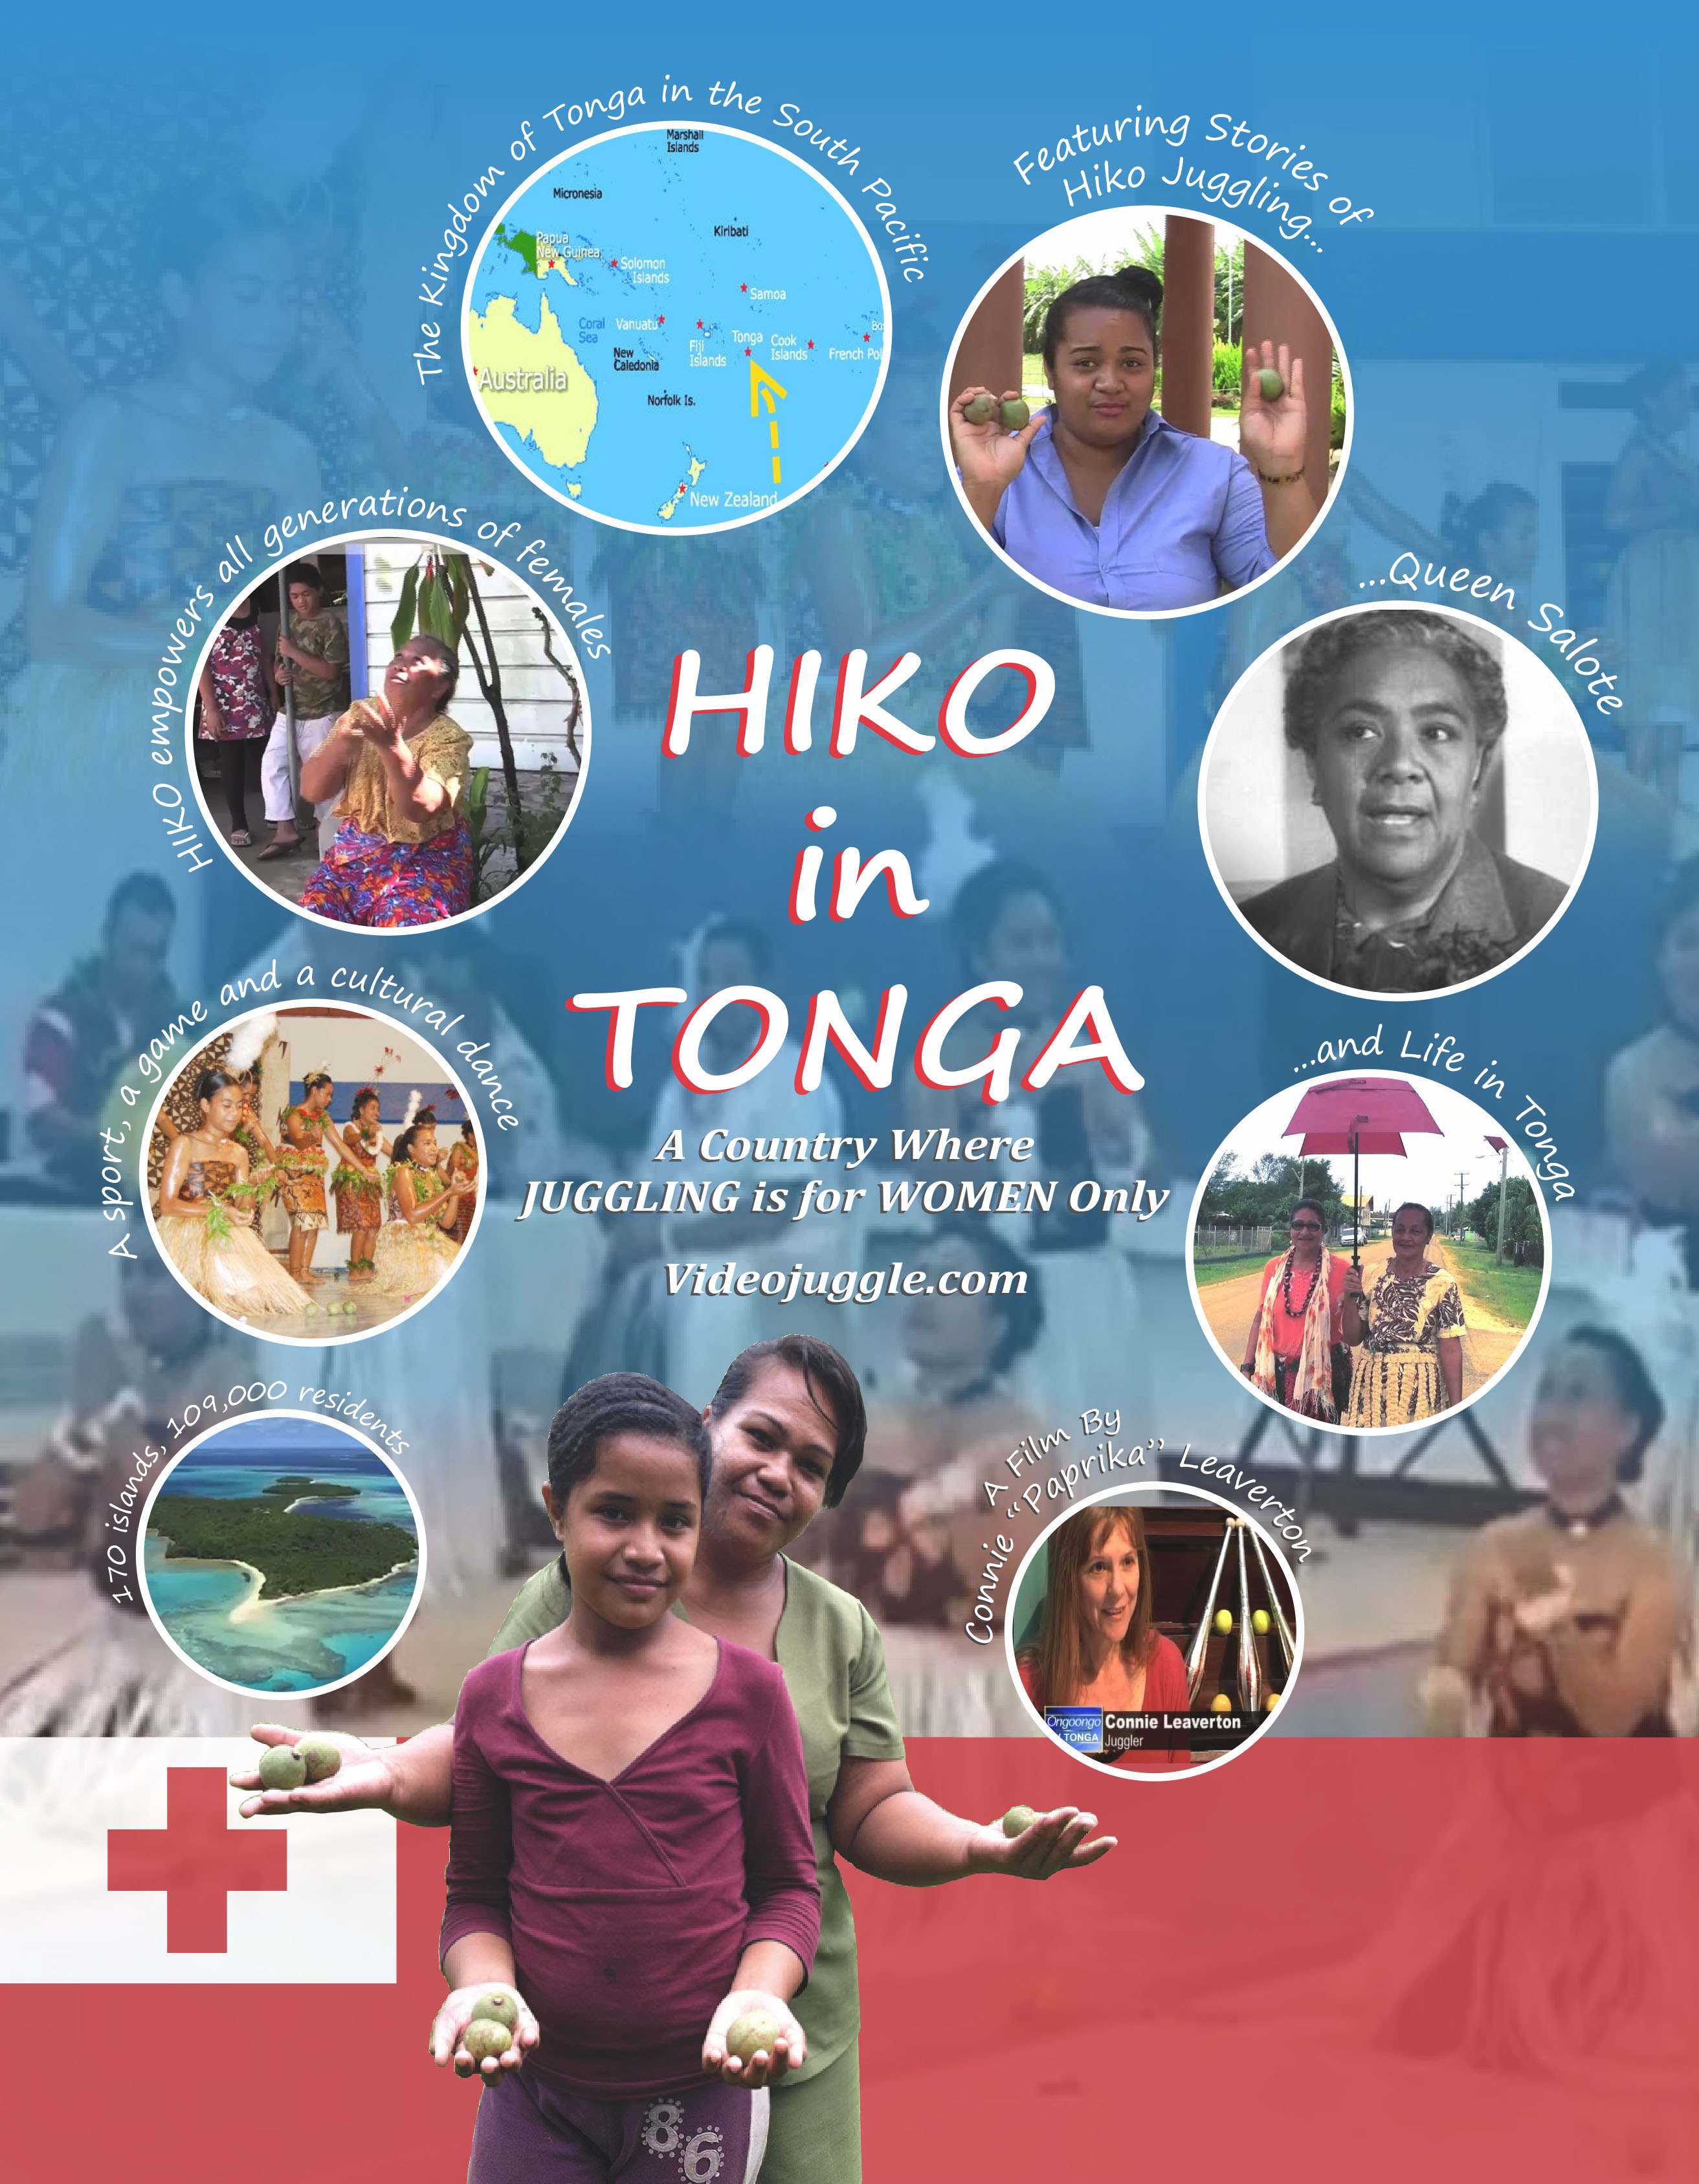 Hiko in Tonga